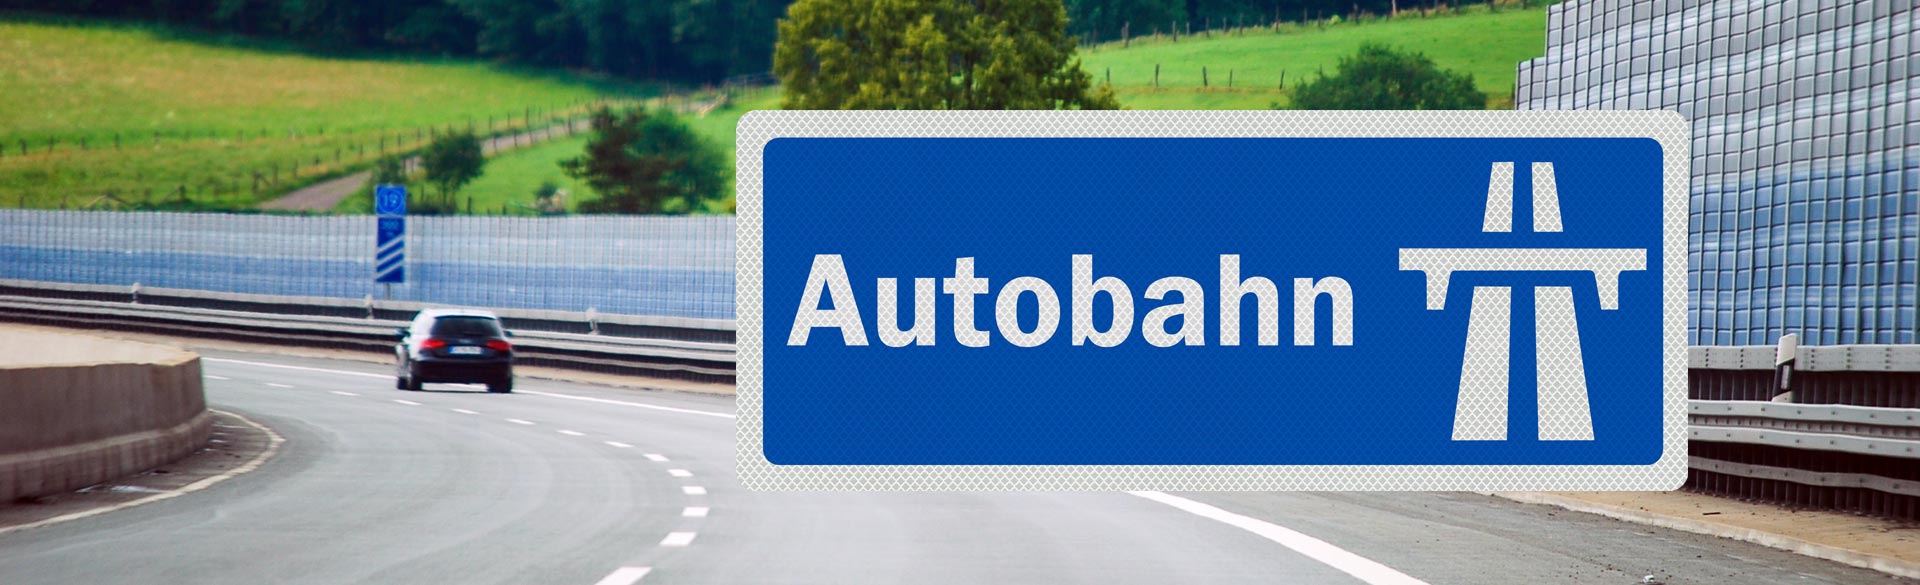 Amerika vs. Deutschland: Autobahn